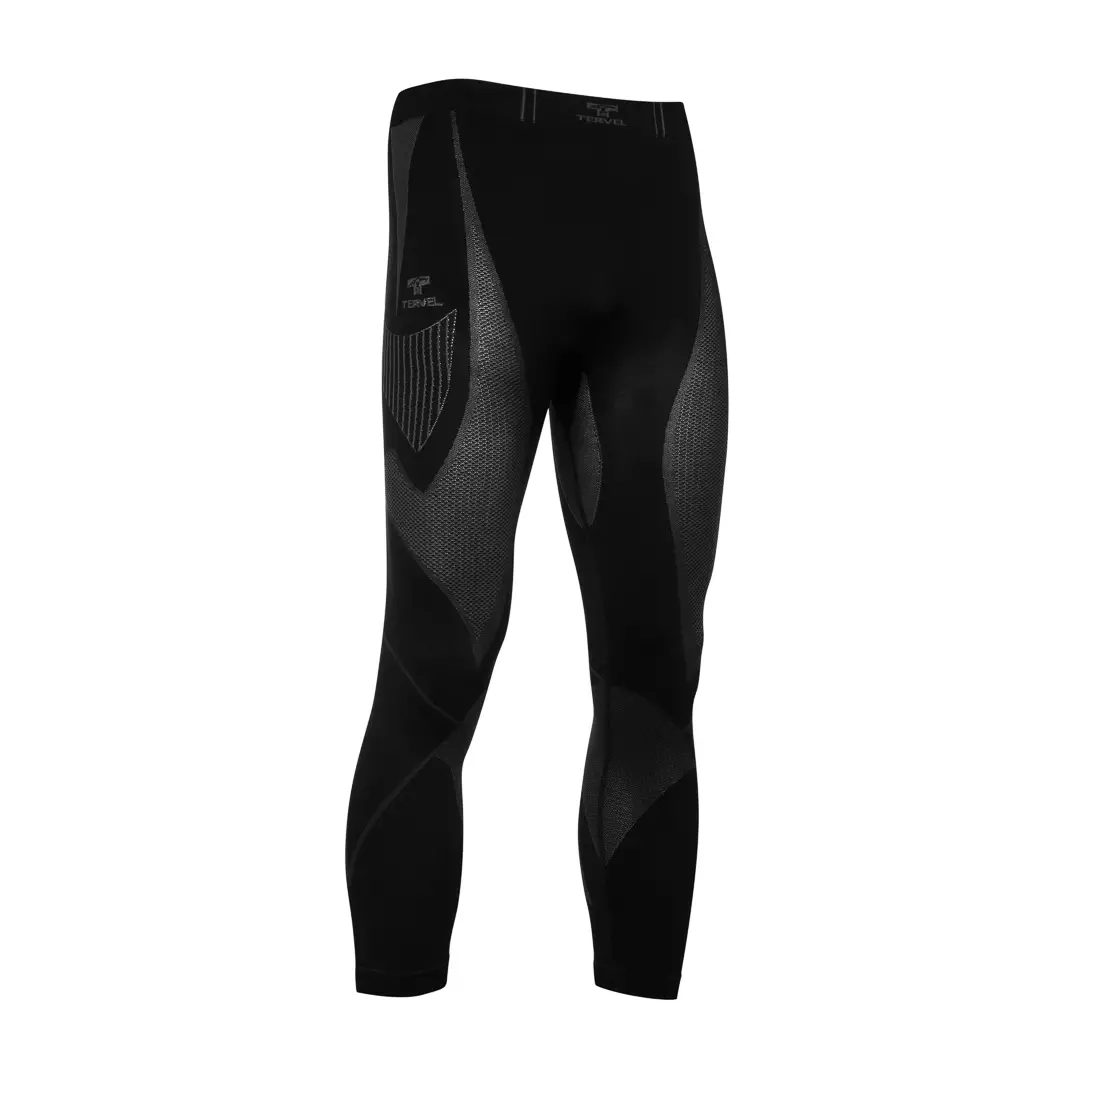 TERVEL OPTILINE MOD-02 - men's thermal leggings, color: Black and gray